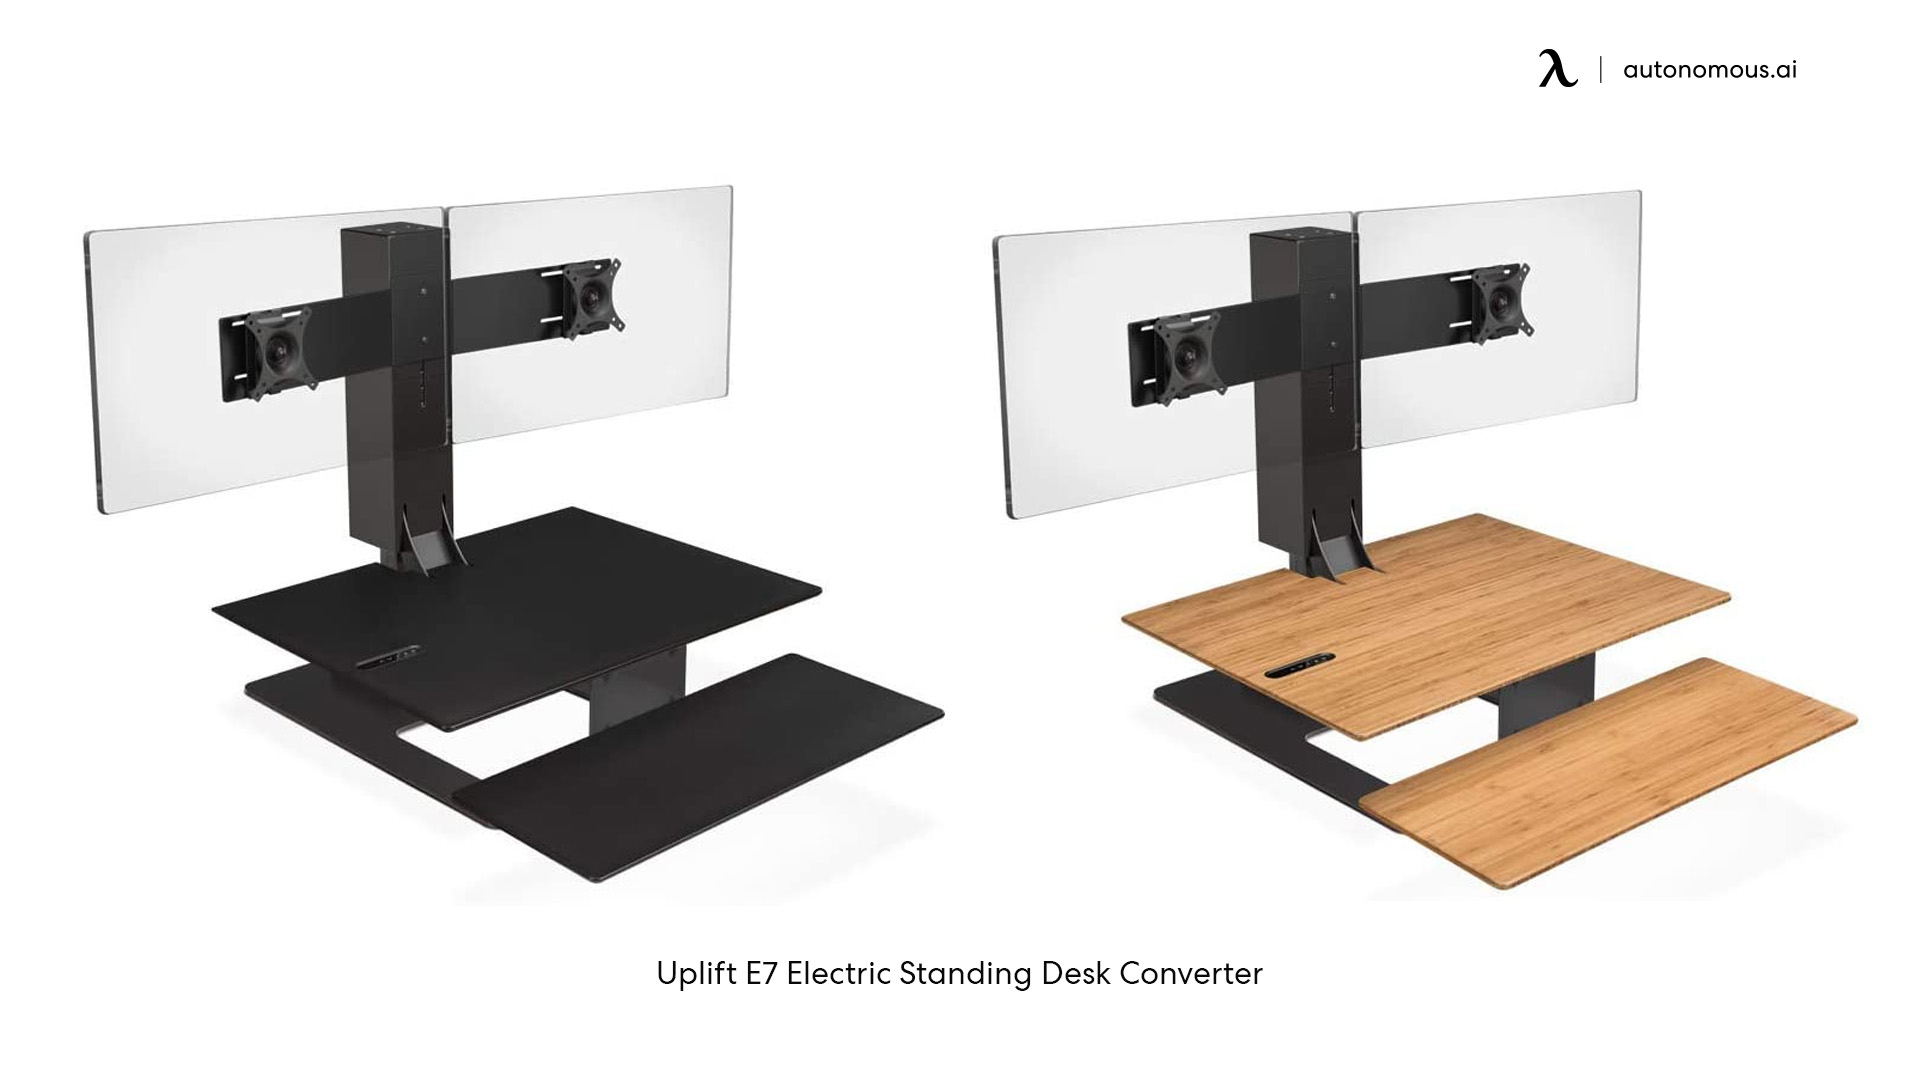 Uplift E7 Electric Standing Desk Converter